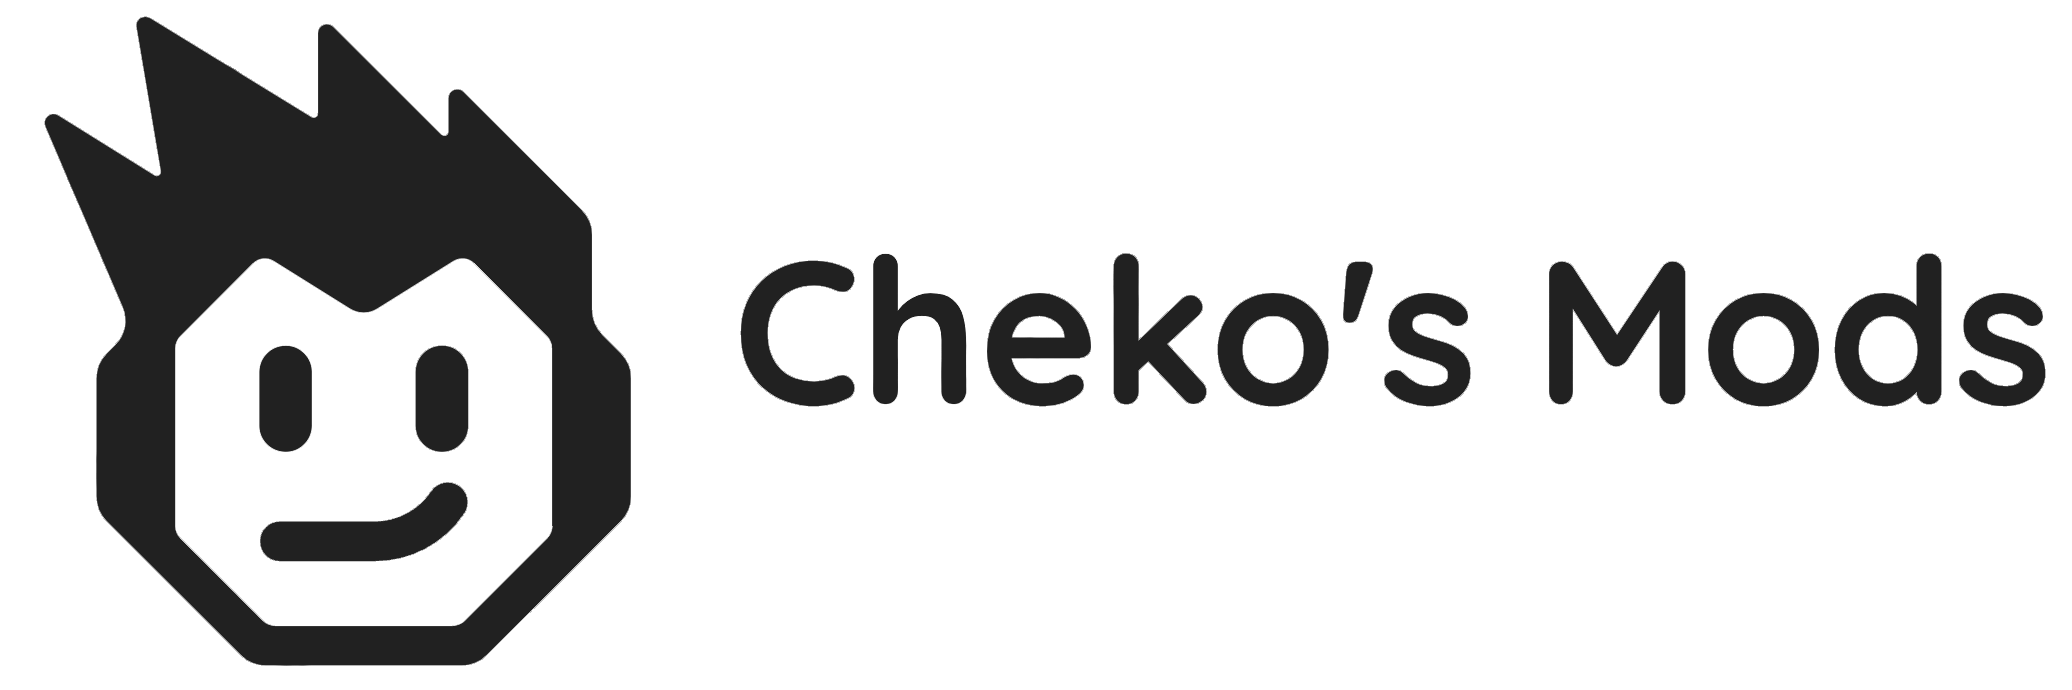 Cheko's Mods